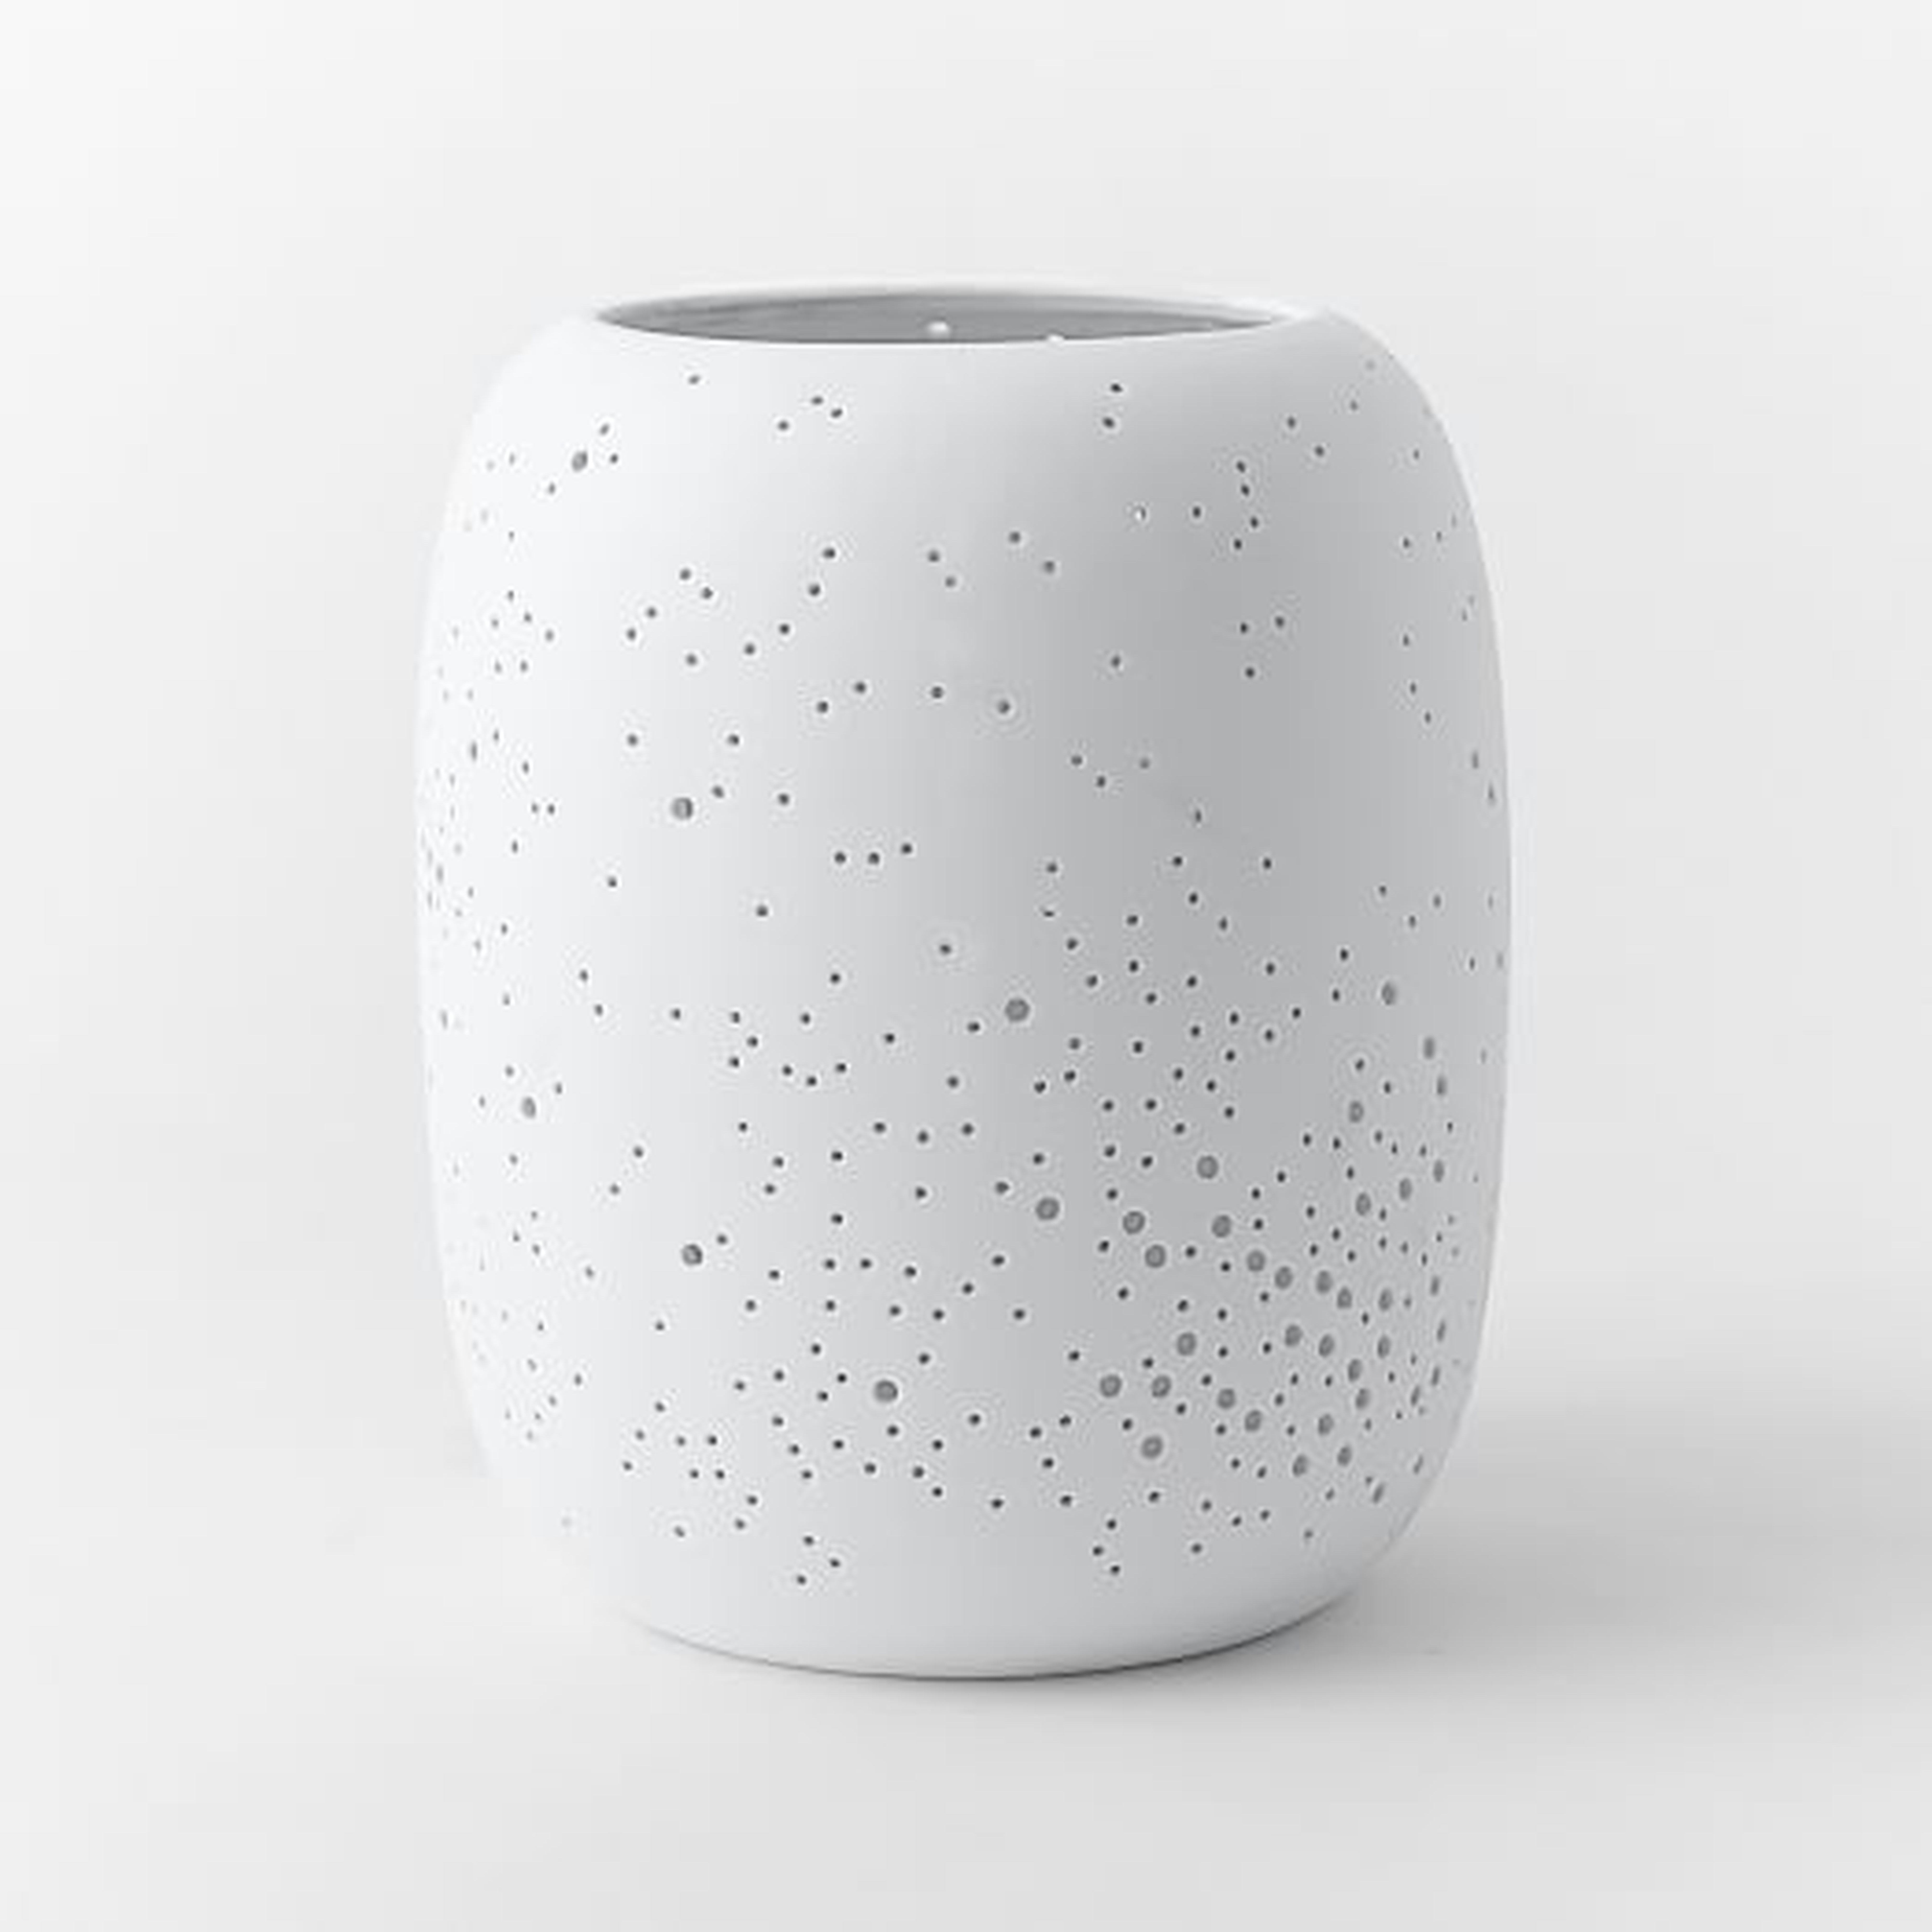 Pierced Porcelain Hurricanes + Vases - Constellation Medium - West Elm